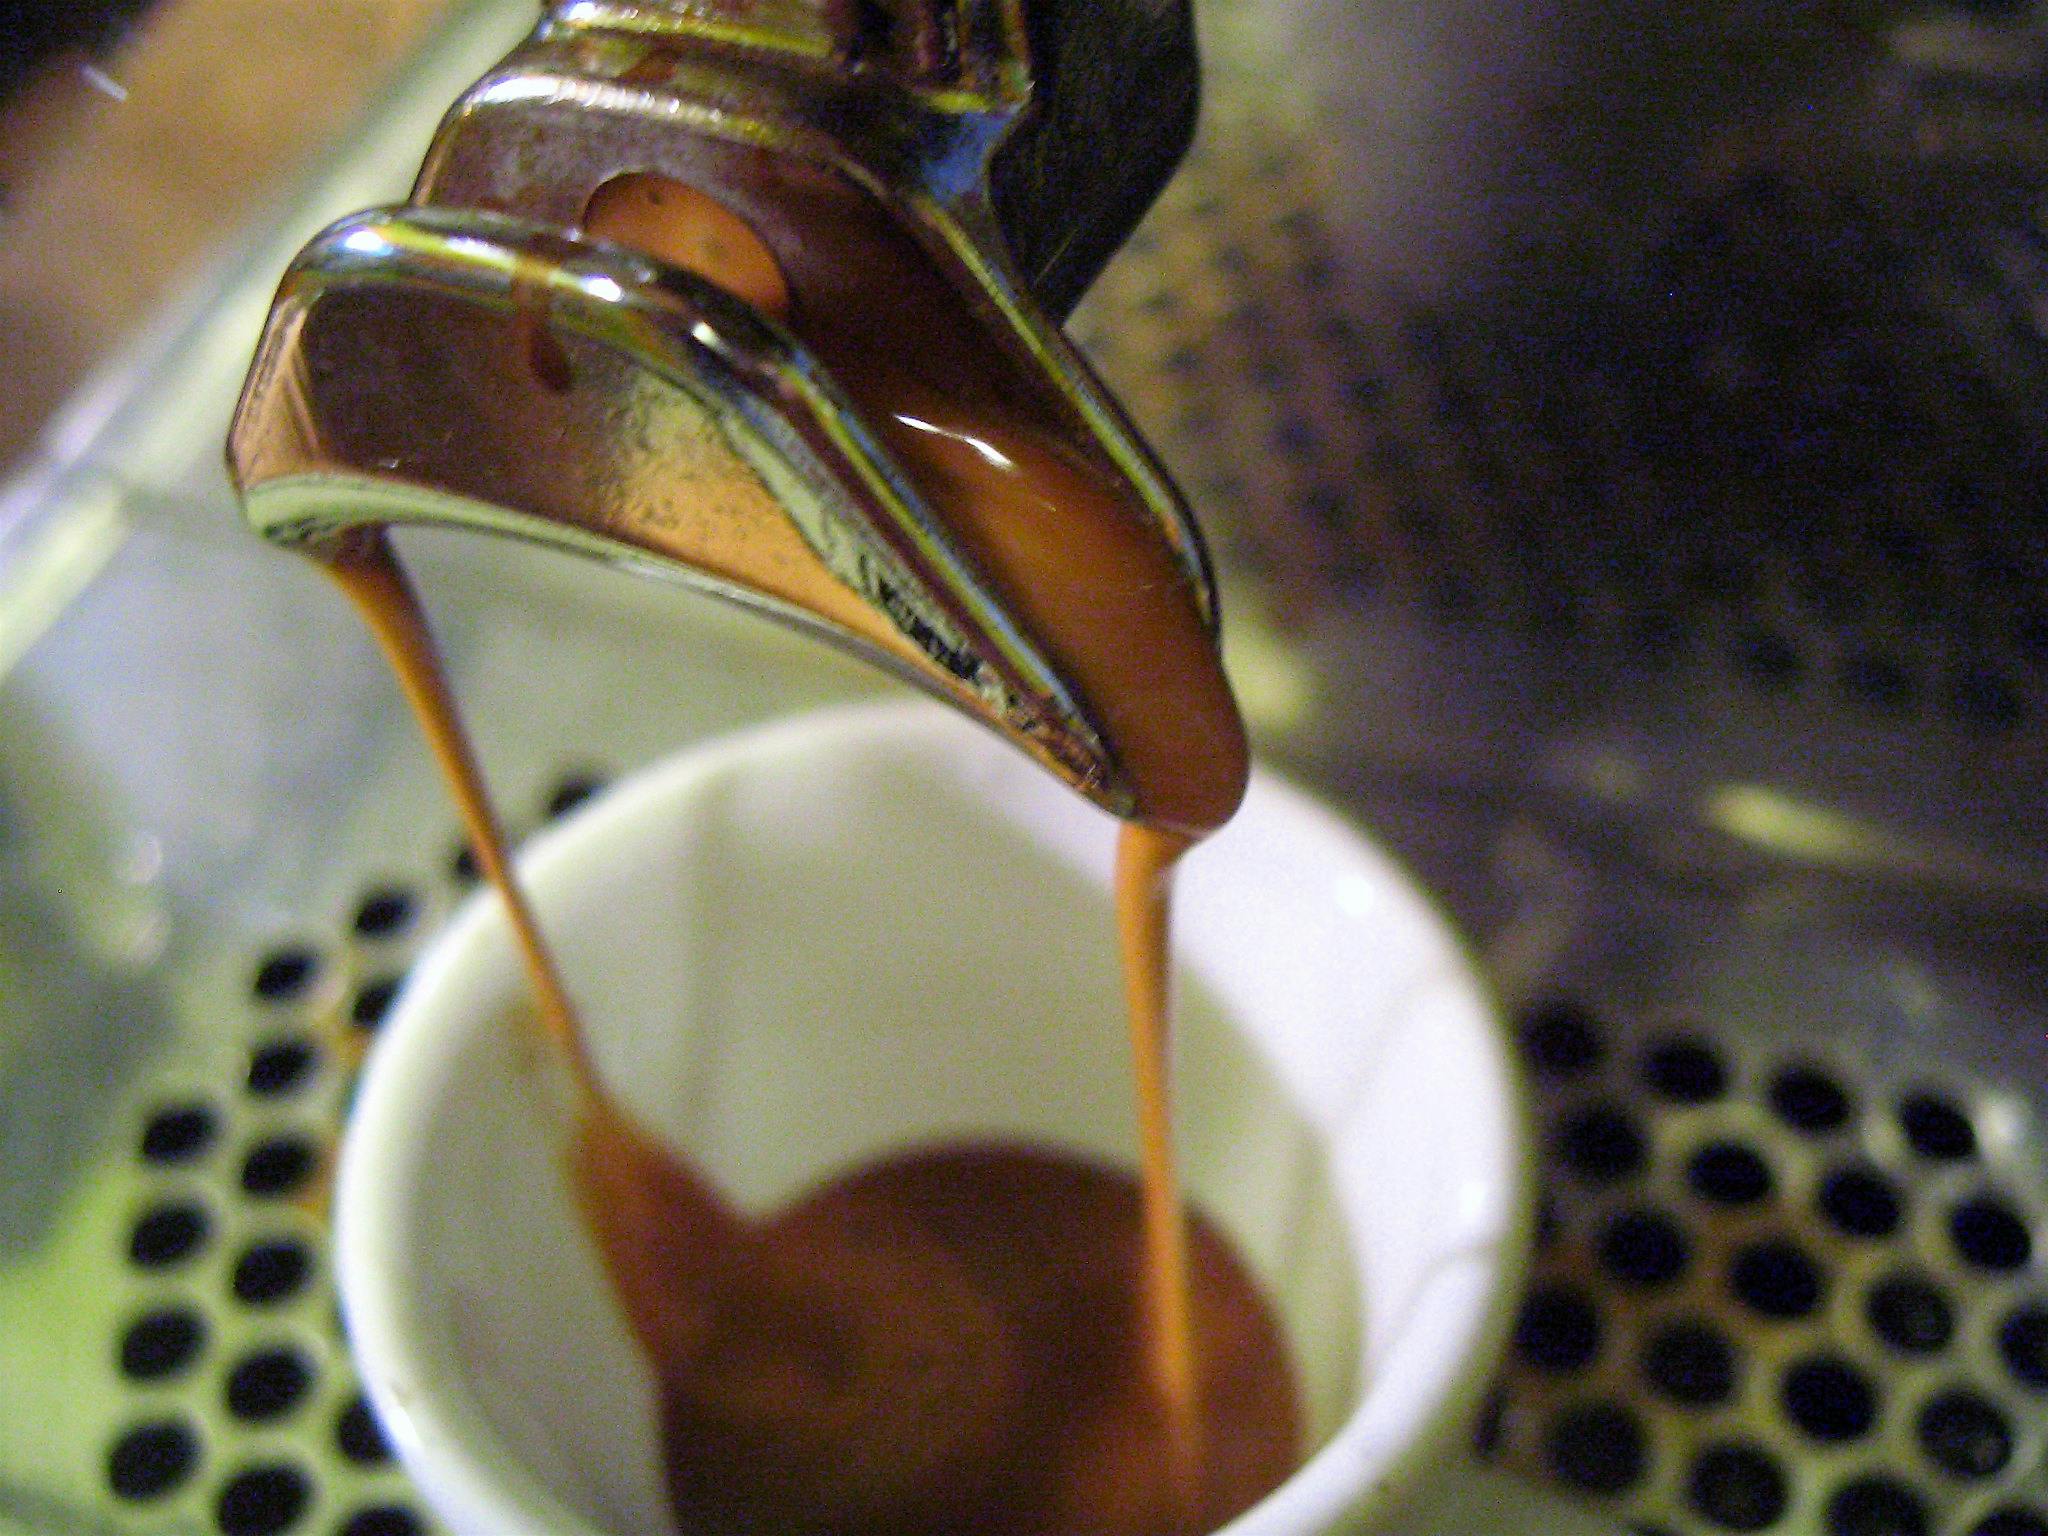 espresso dripping from a portafilter